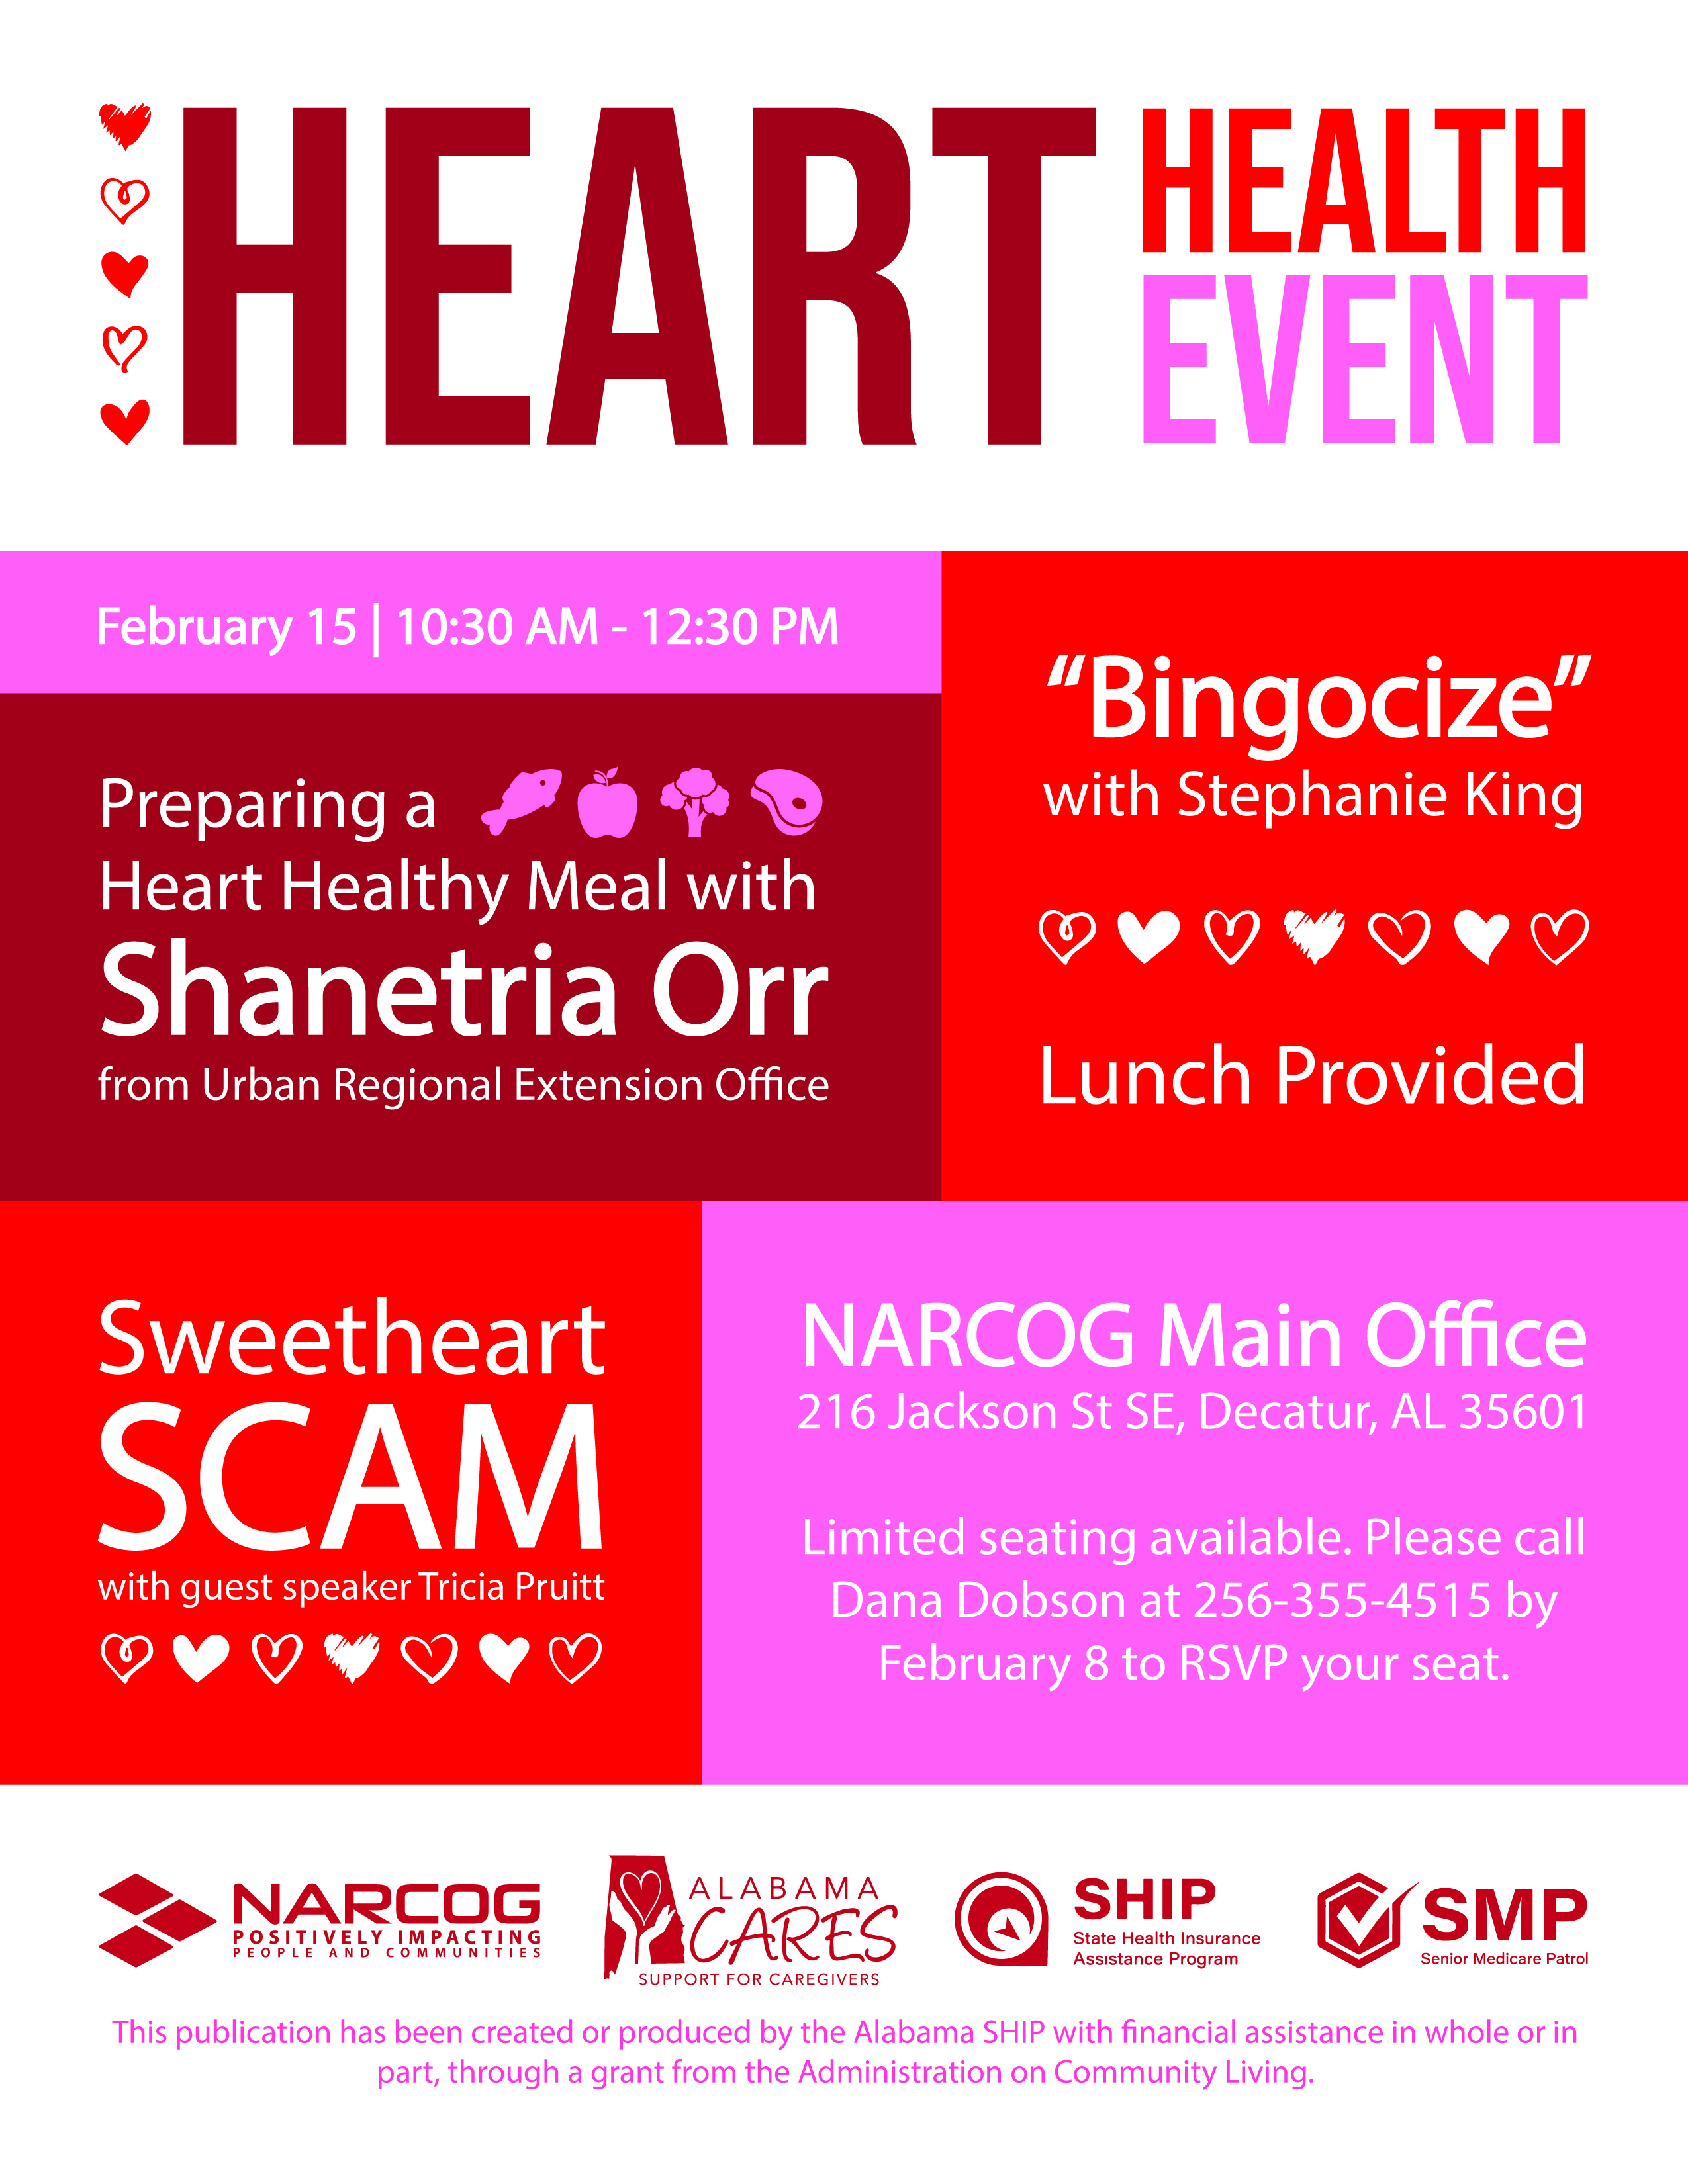 Heart_Health_Event-01.jpg